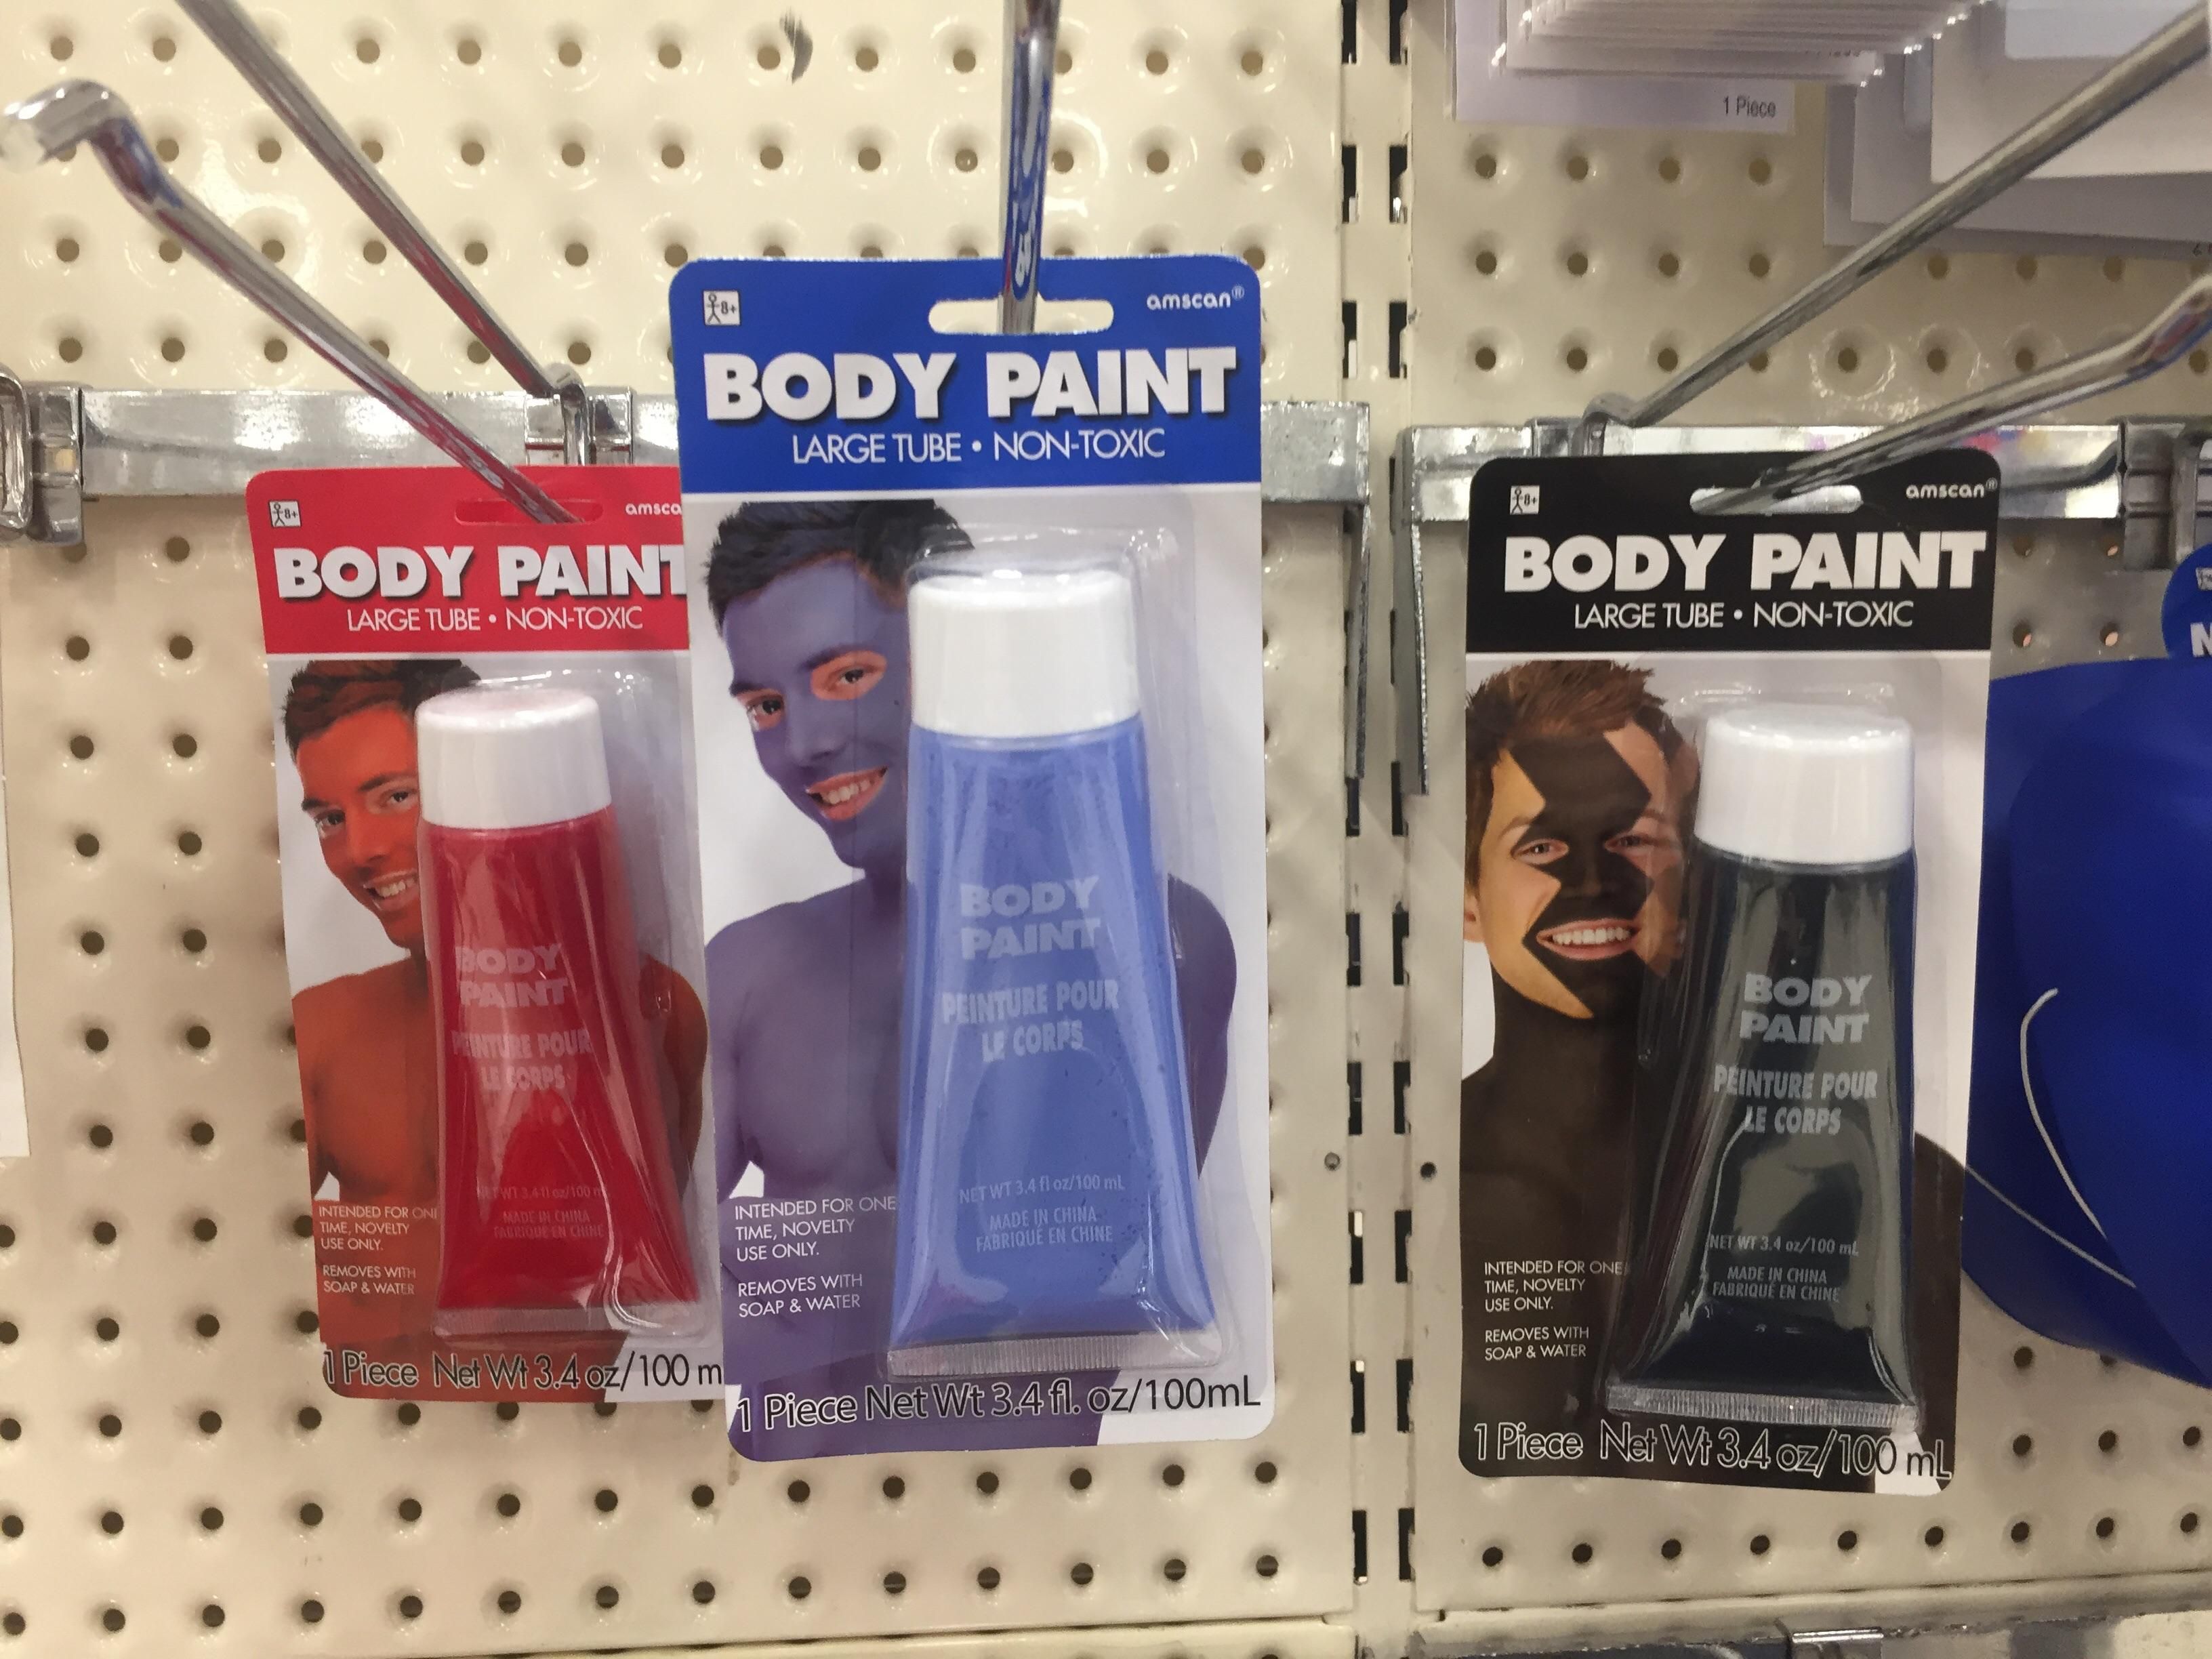 Good call, Body Paint Company.